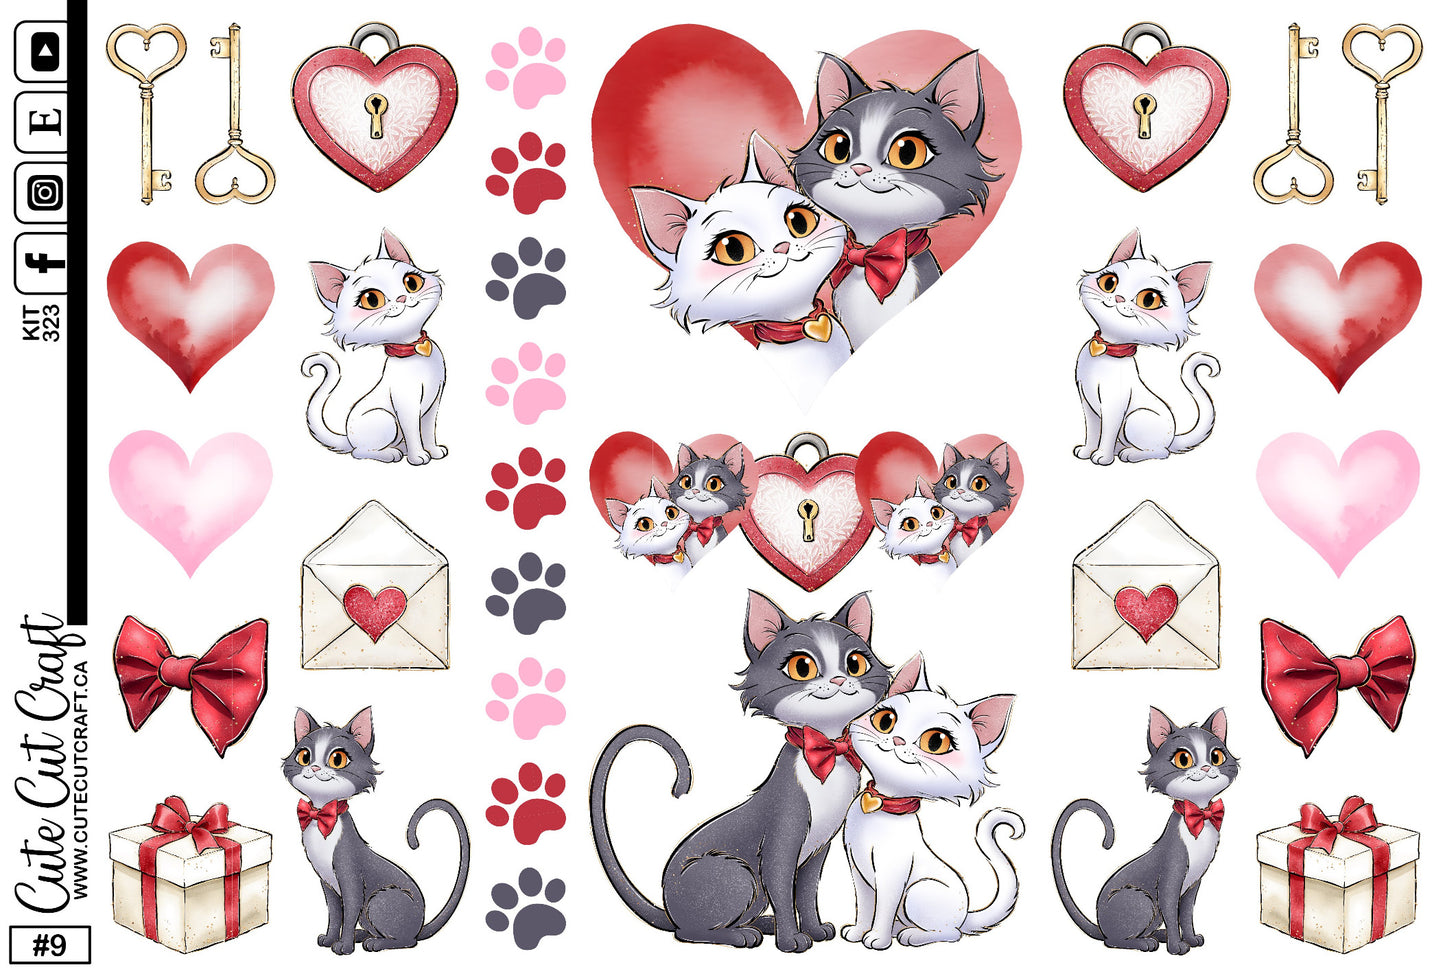 Kitty Love  #323 || HP Dashboard Weekly Kit